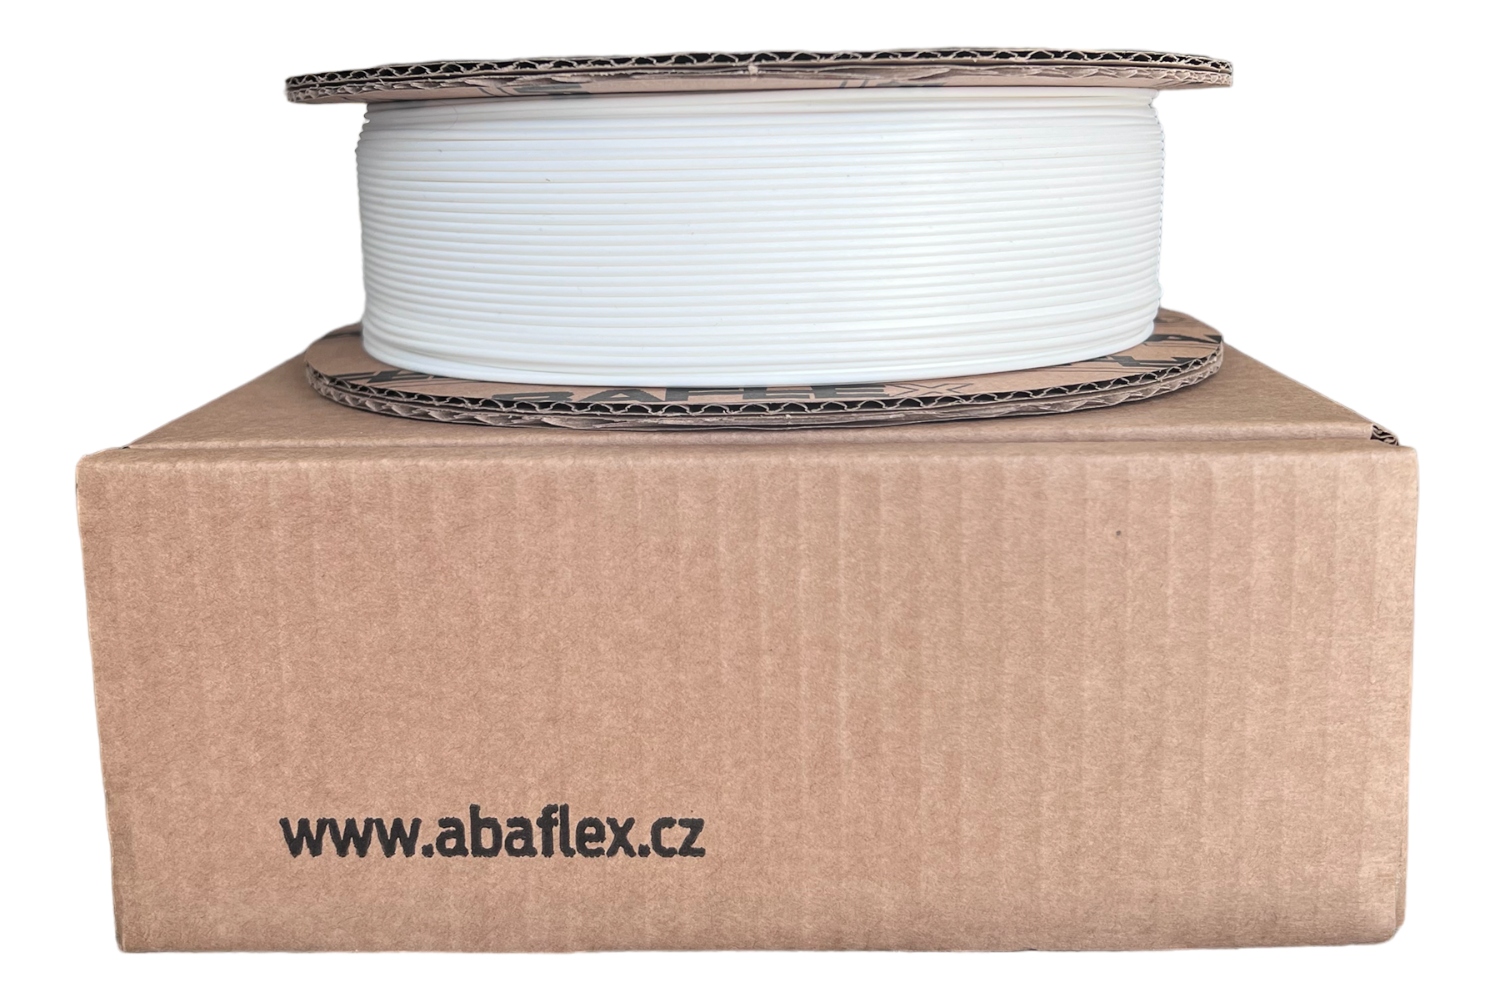 PLA filament ABAFLEX bílý, 1.75 ± 0.019 mm, 750g, cívka 64mm